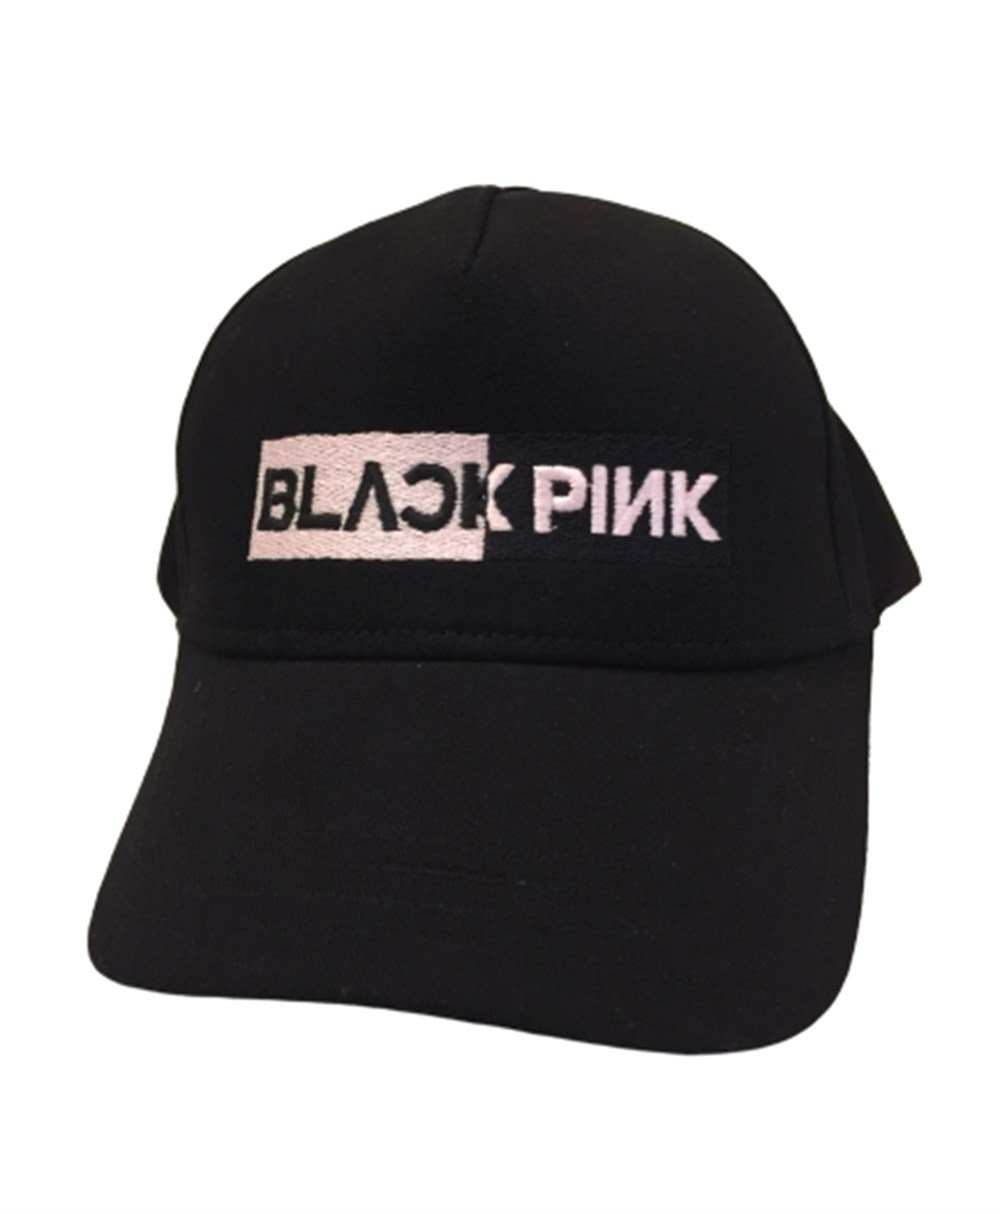 Blackpink Şapka